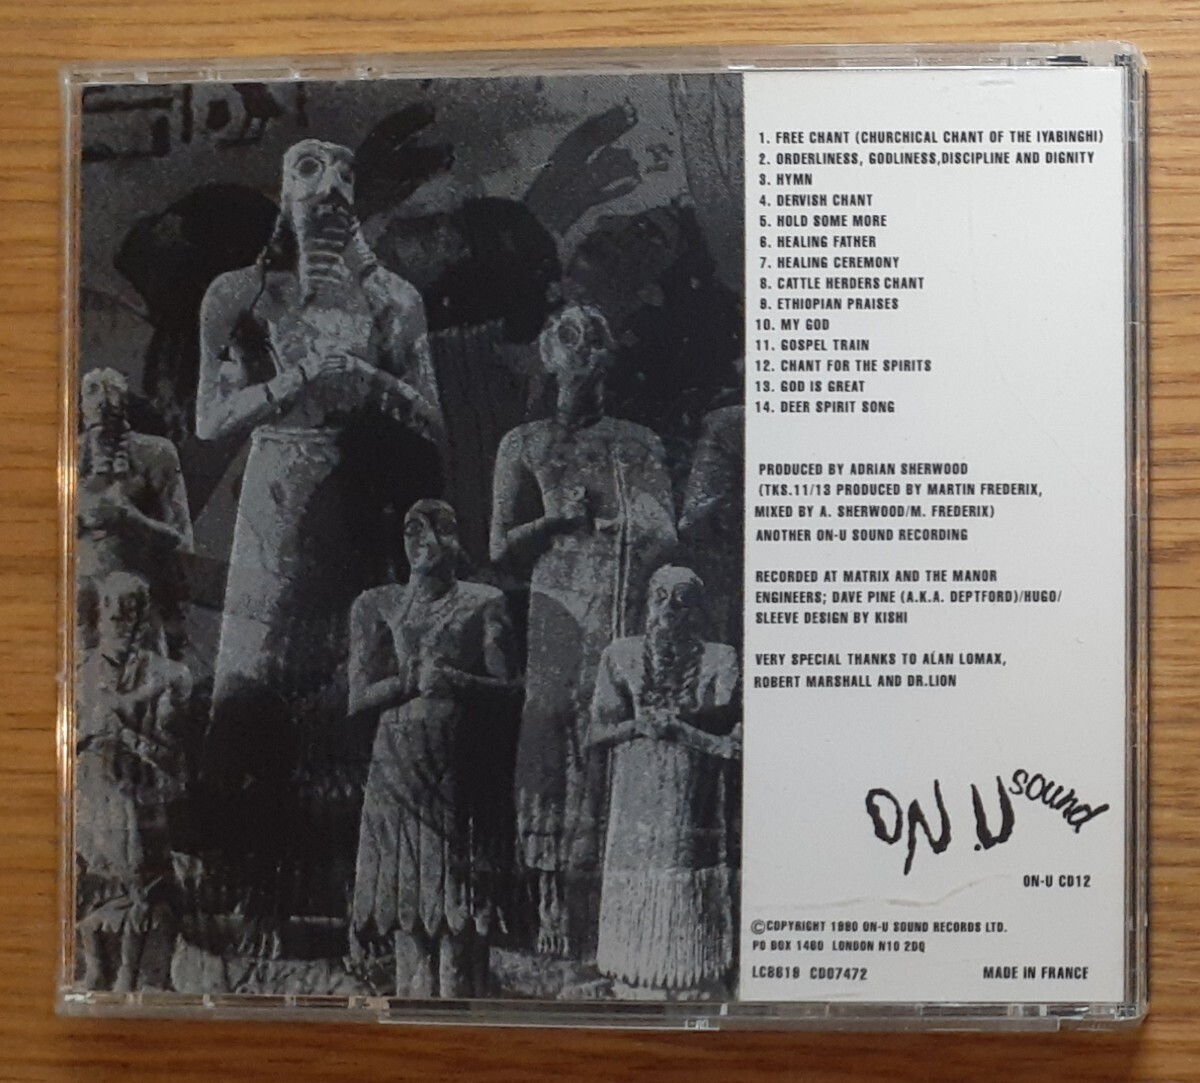 African Head Charge / Songs Of Praise CD on-u dub_画像2